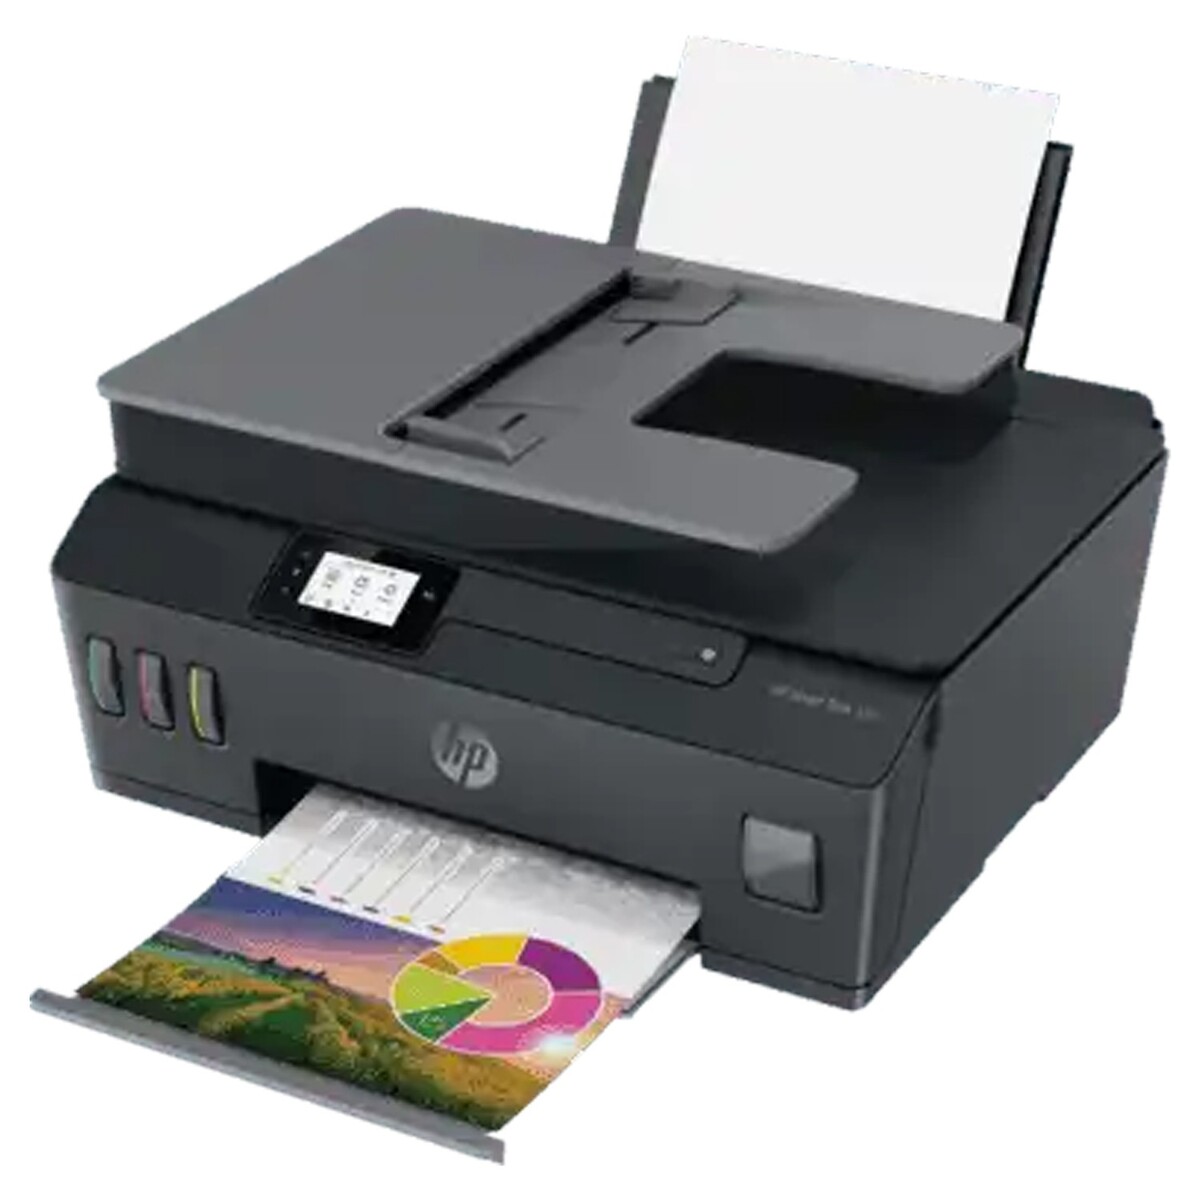 HP Smart Ink Tank Multi Function Printer 530